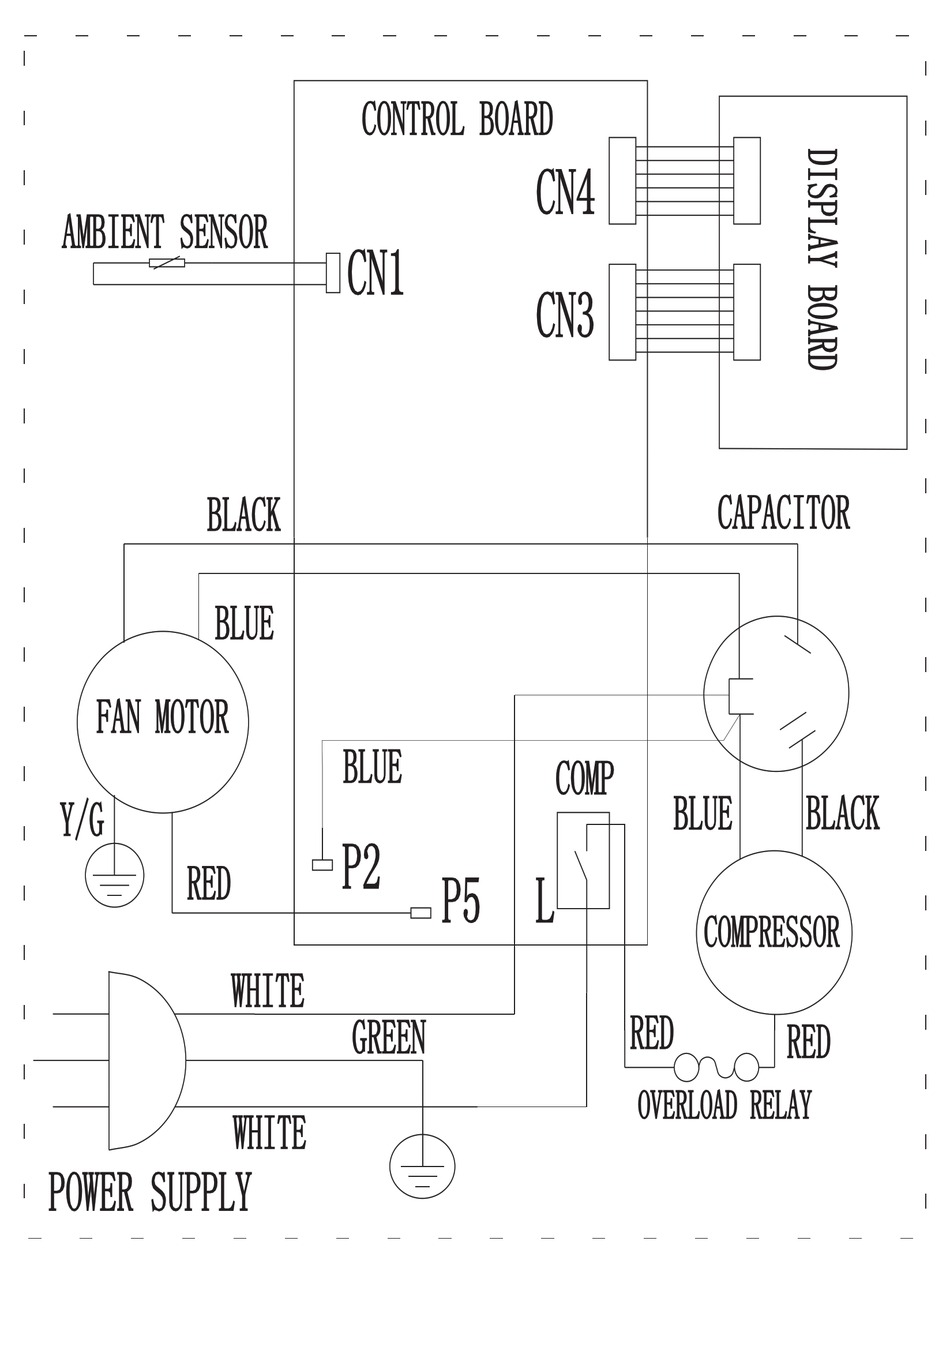 FRIGIDAIRE FAC124N1A2 AIR CONDITIONER WIRING DIAGRAM | ManualsLib  Frigidaire Air Conditioner Wiring Diagram Fac127p1a    ManualsLib